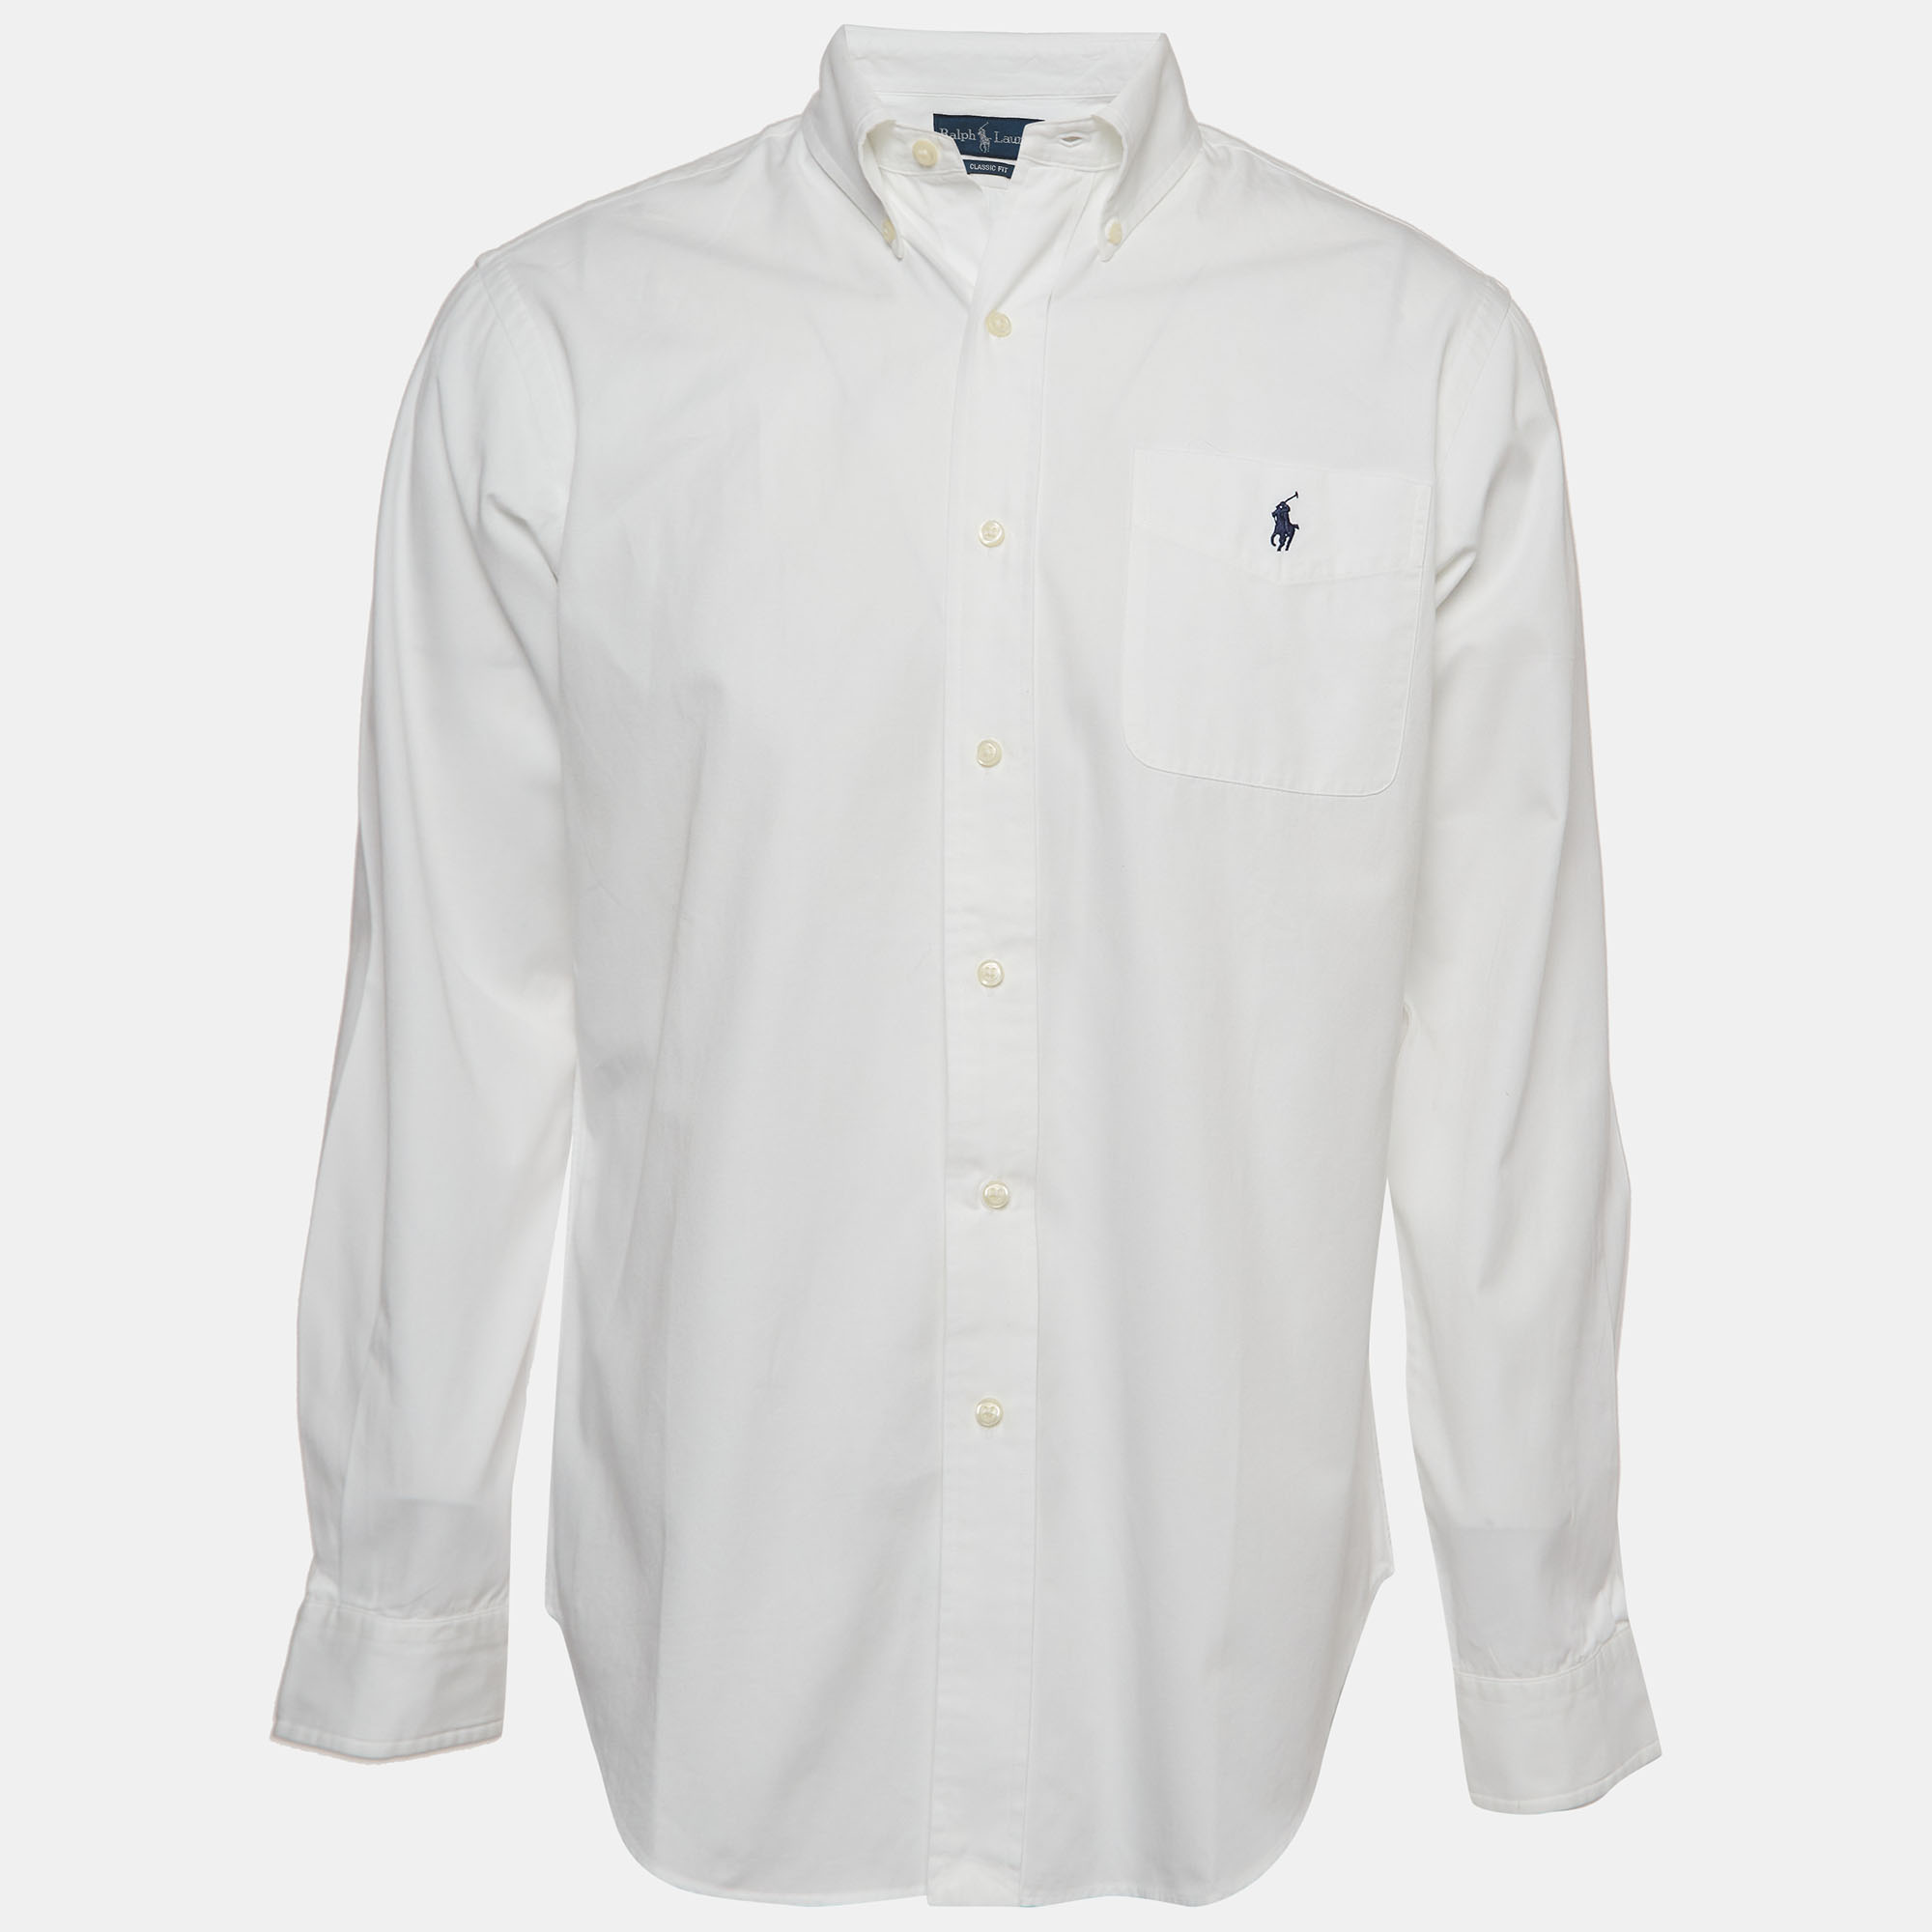 Ralph lauren white logo embroidered cotton button down shirt m